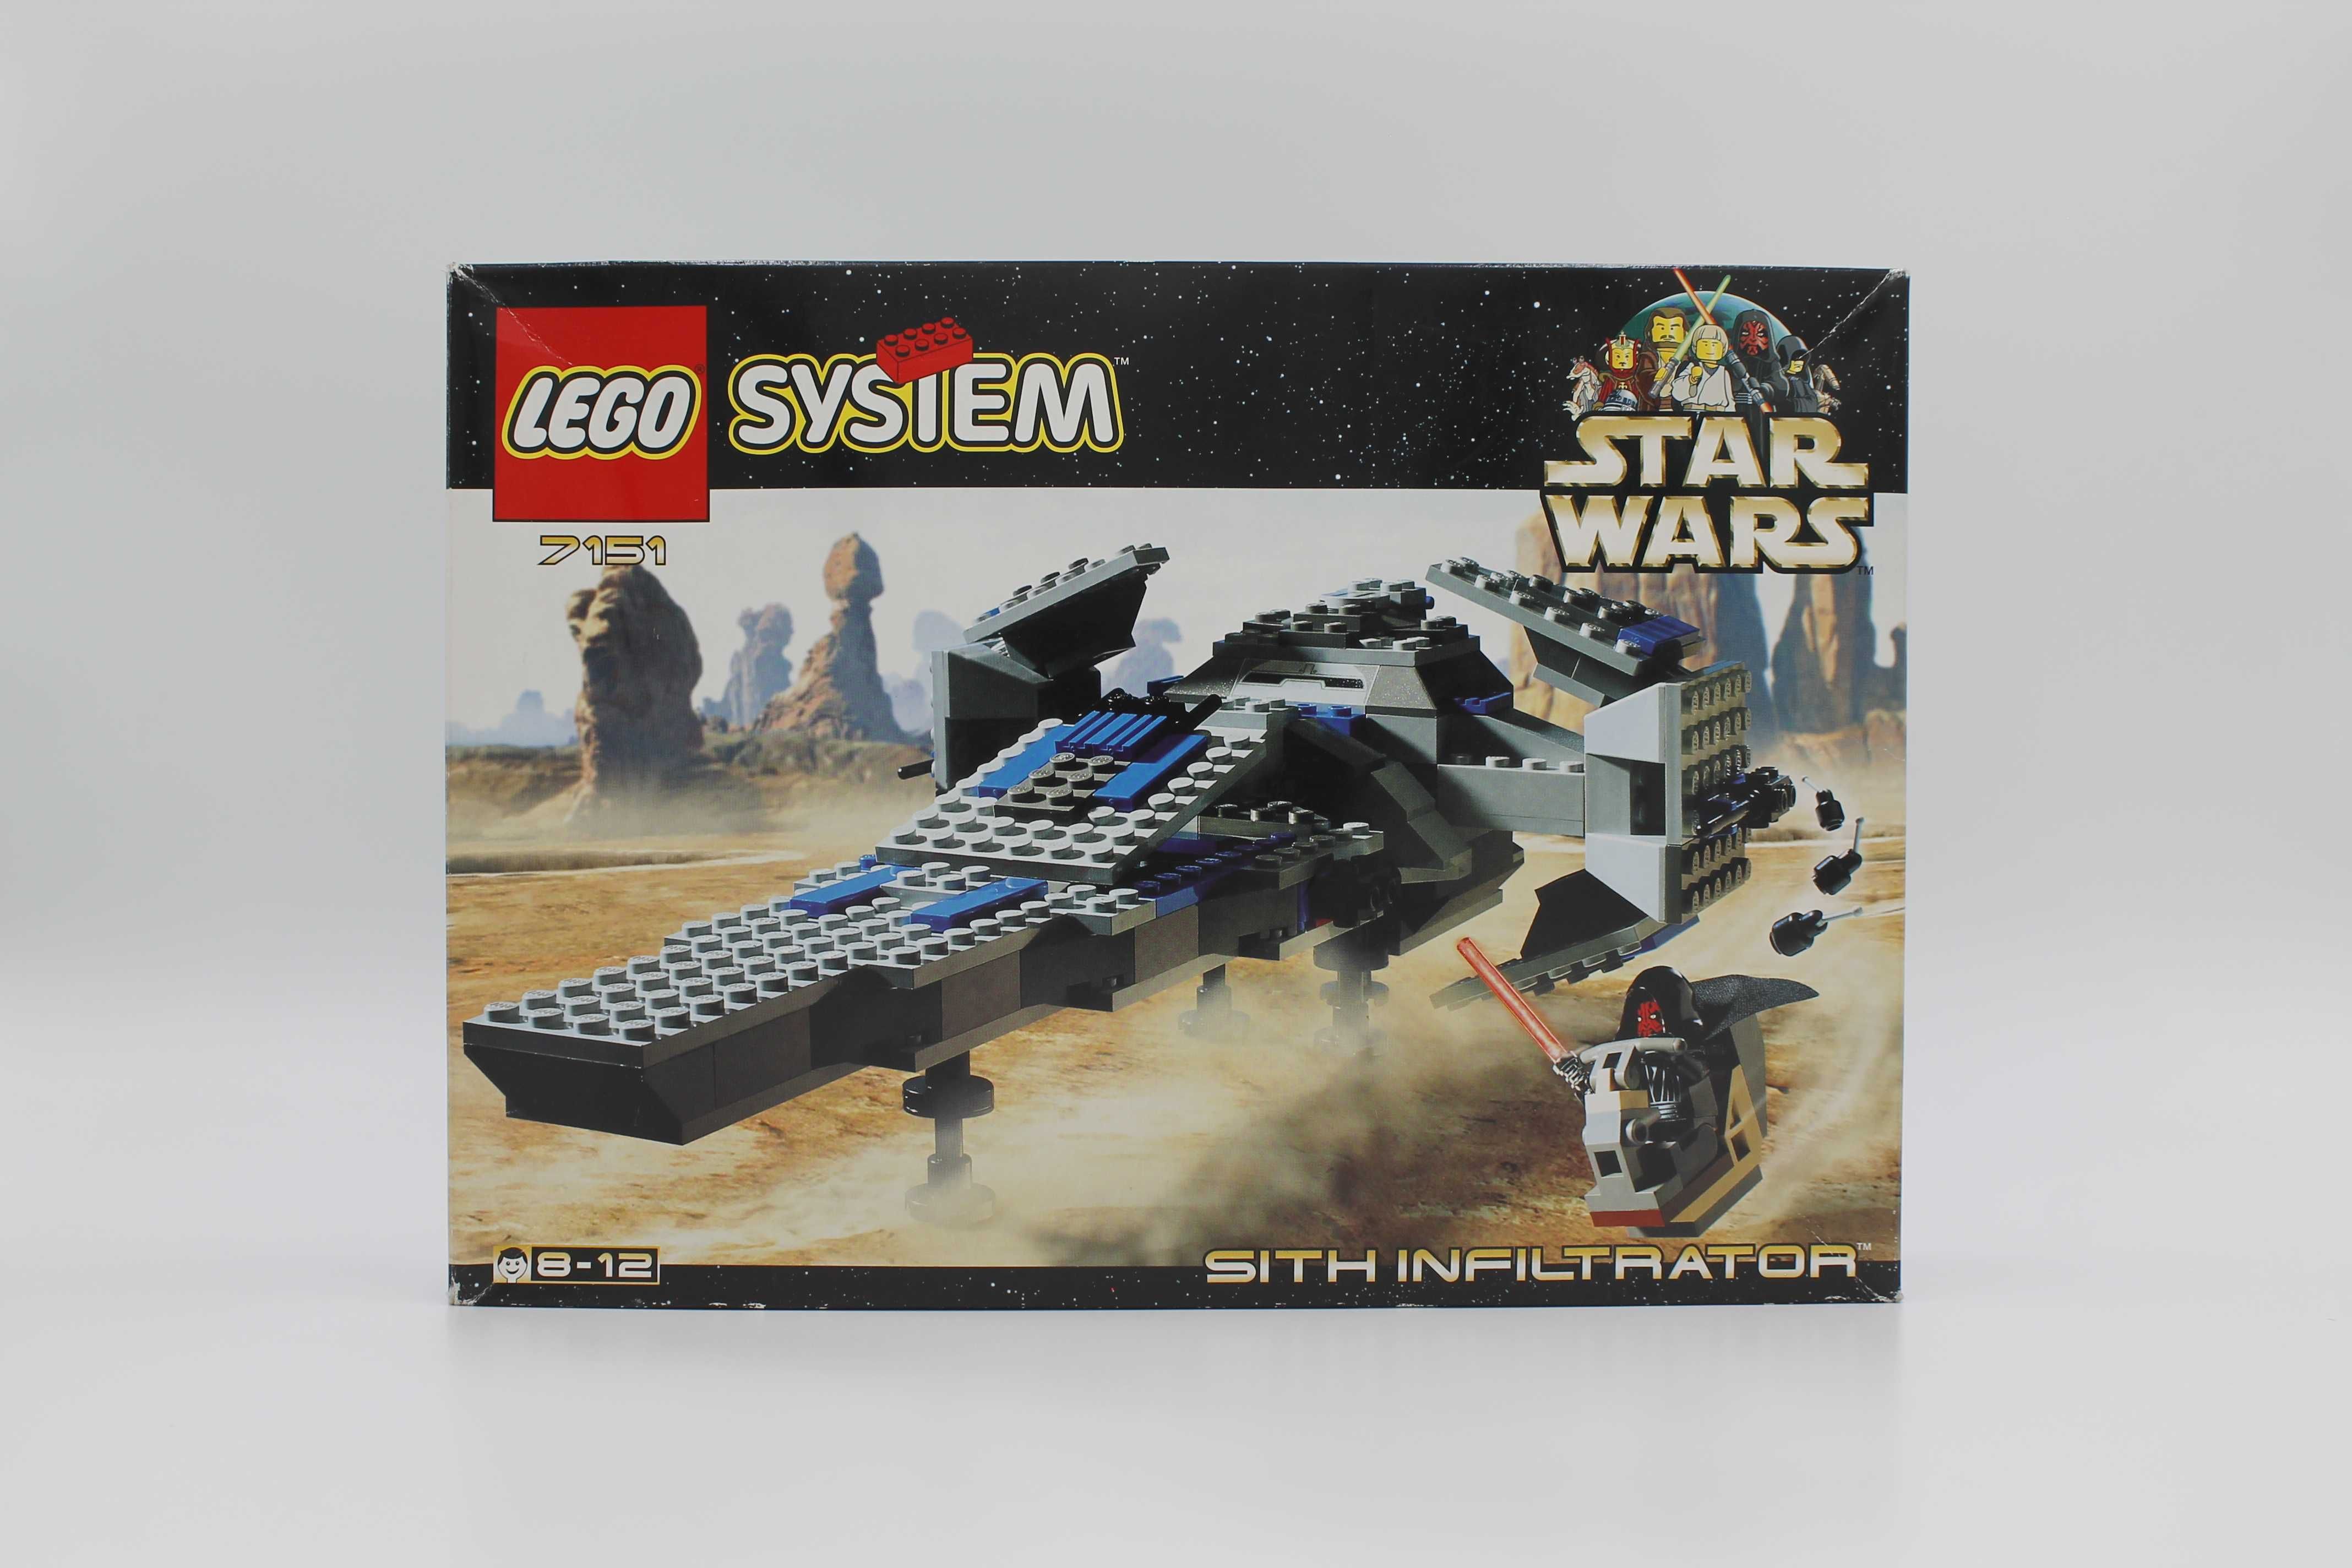 Lego Star Wars 7151 "Sith Infiltrator" (1999)